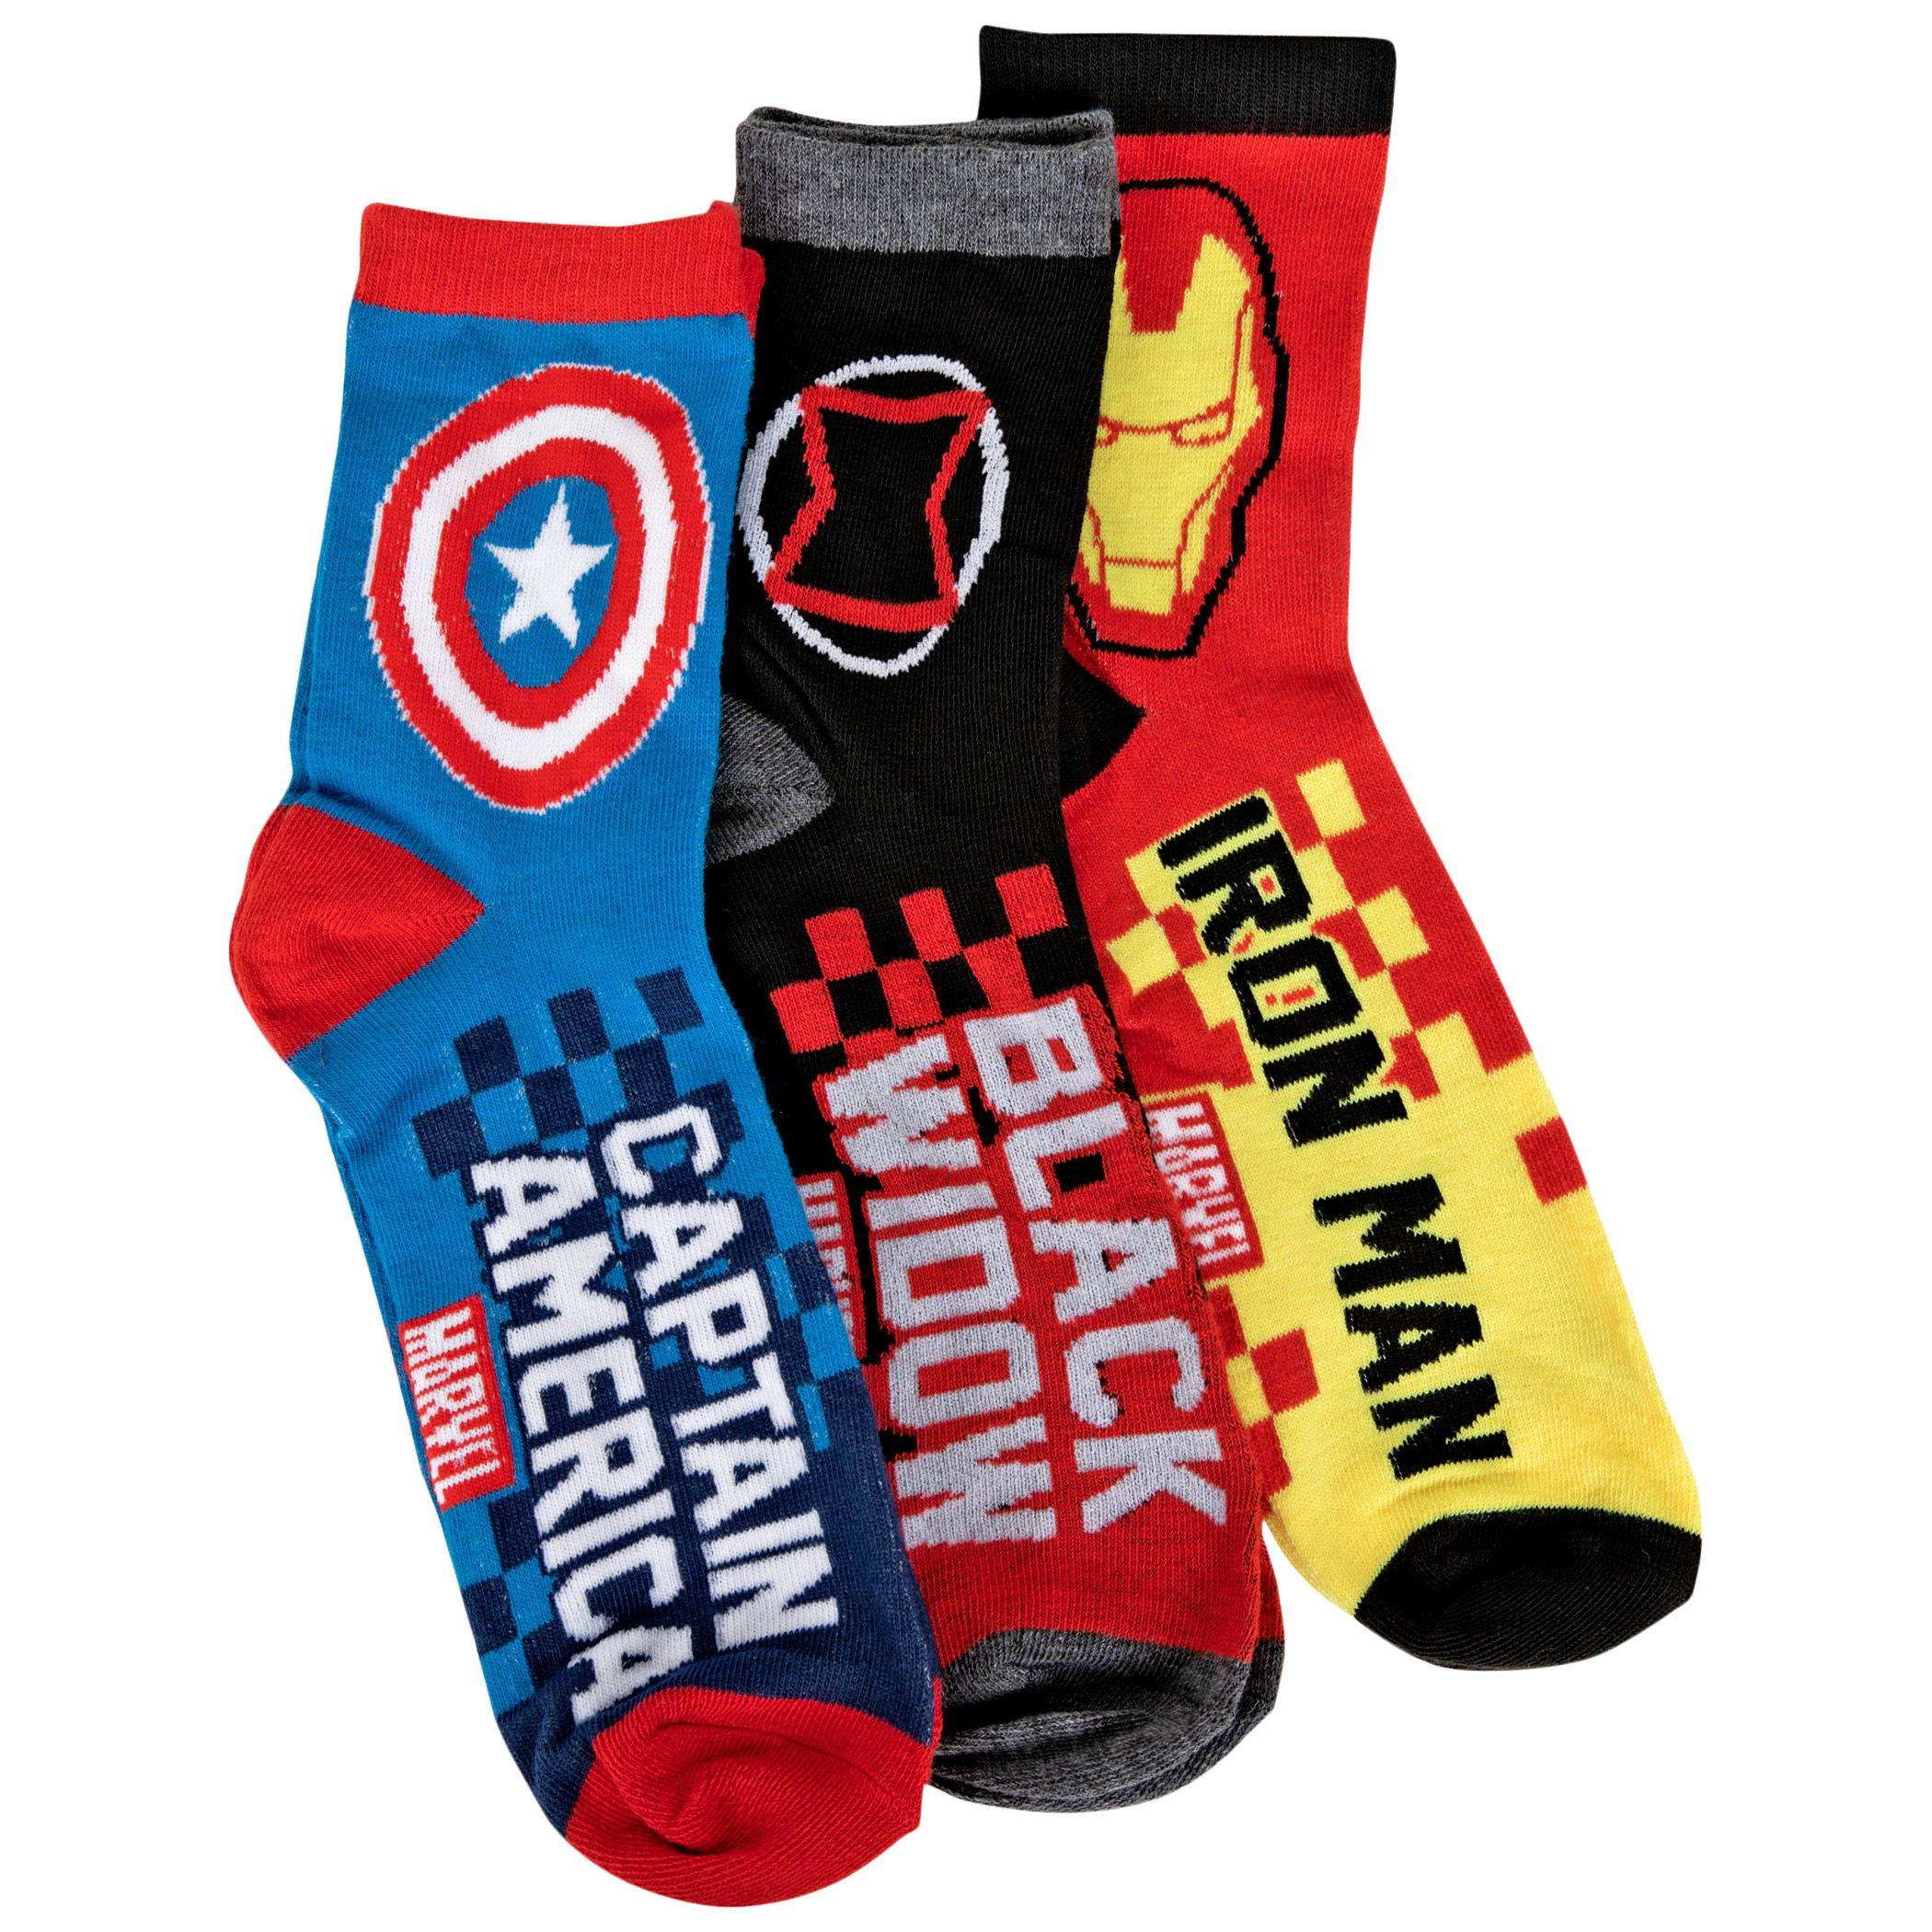 Captain America, Iron Man, and Black Widow Logos 3-Pair Pack of 3/4 Crew Socks